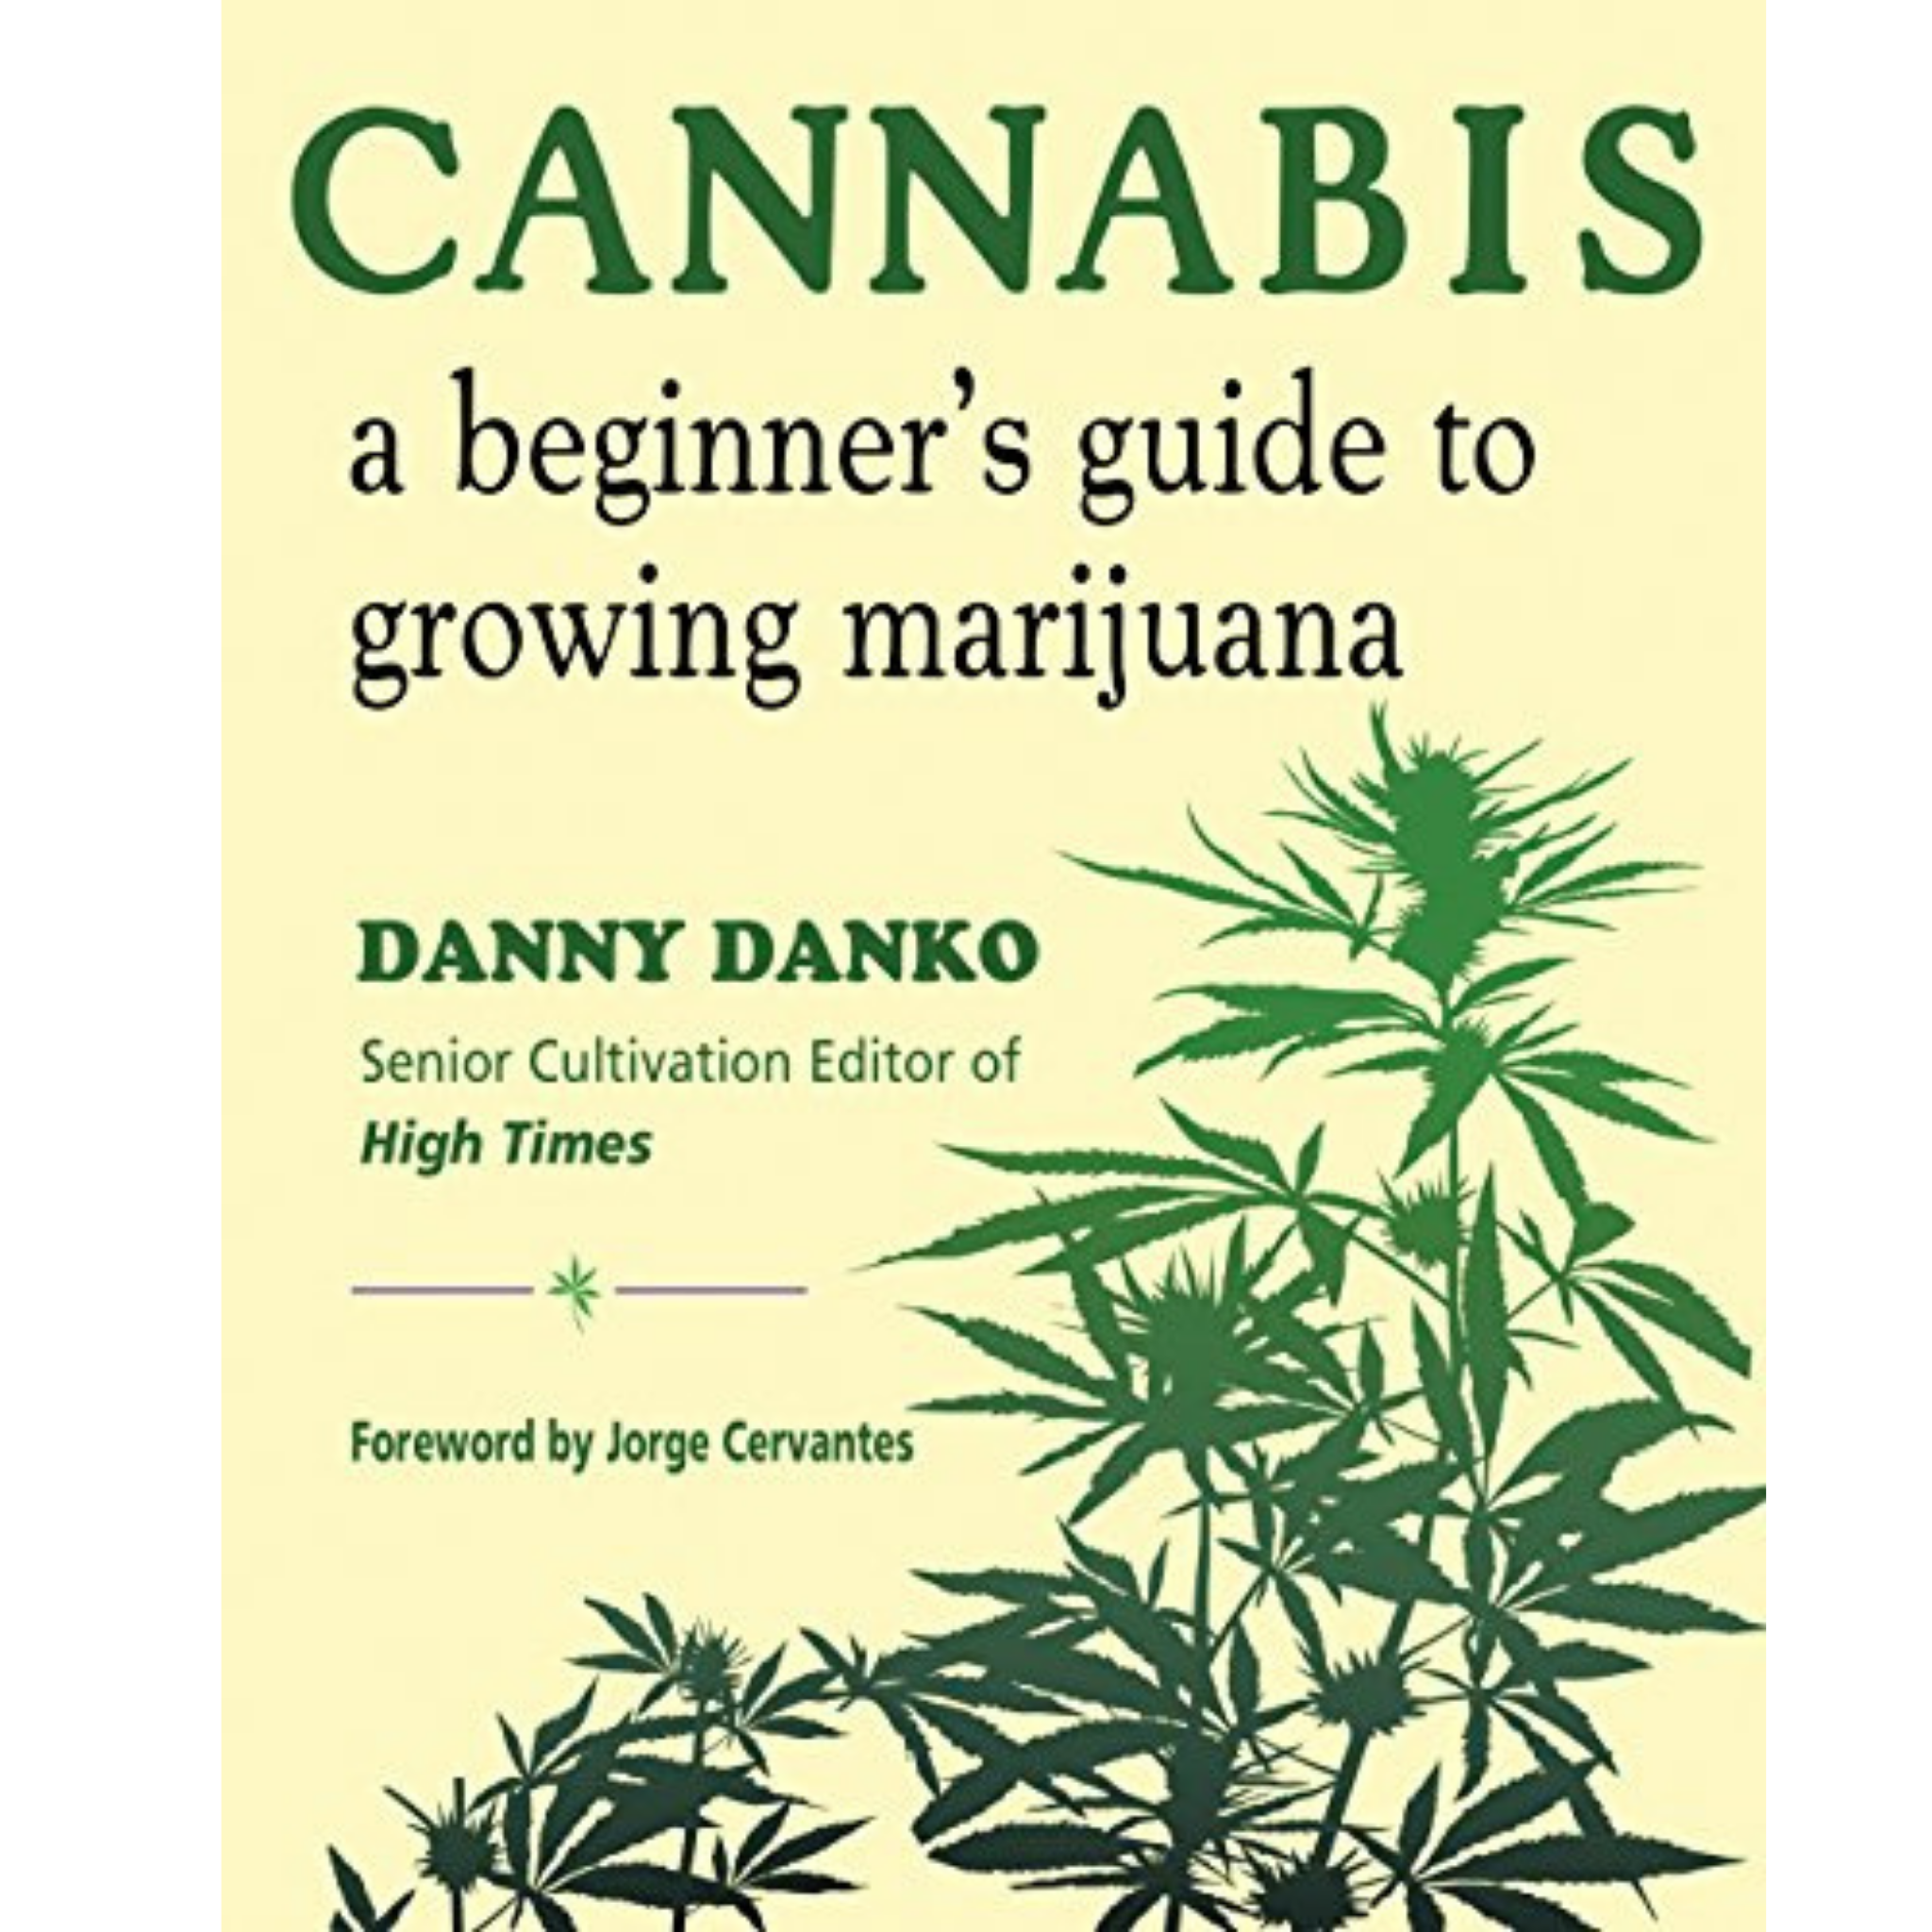 Danny Danko: A Beginner's guide to growing